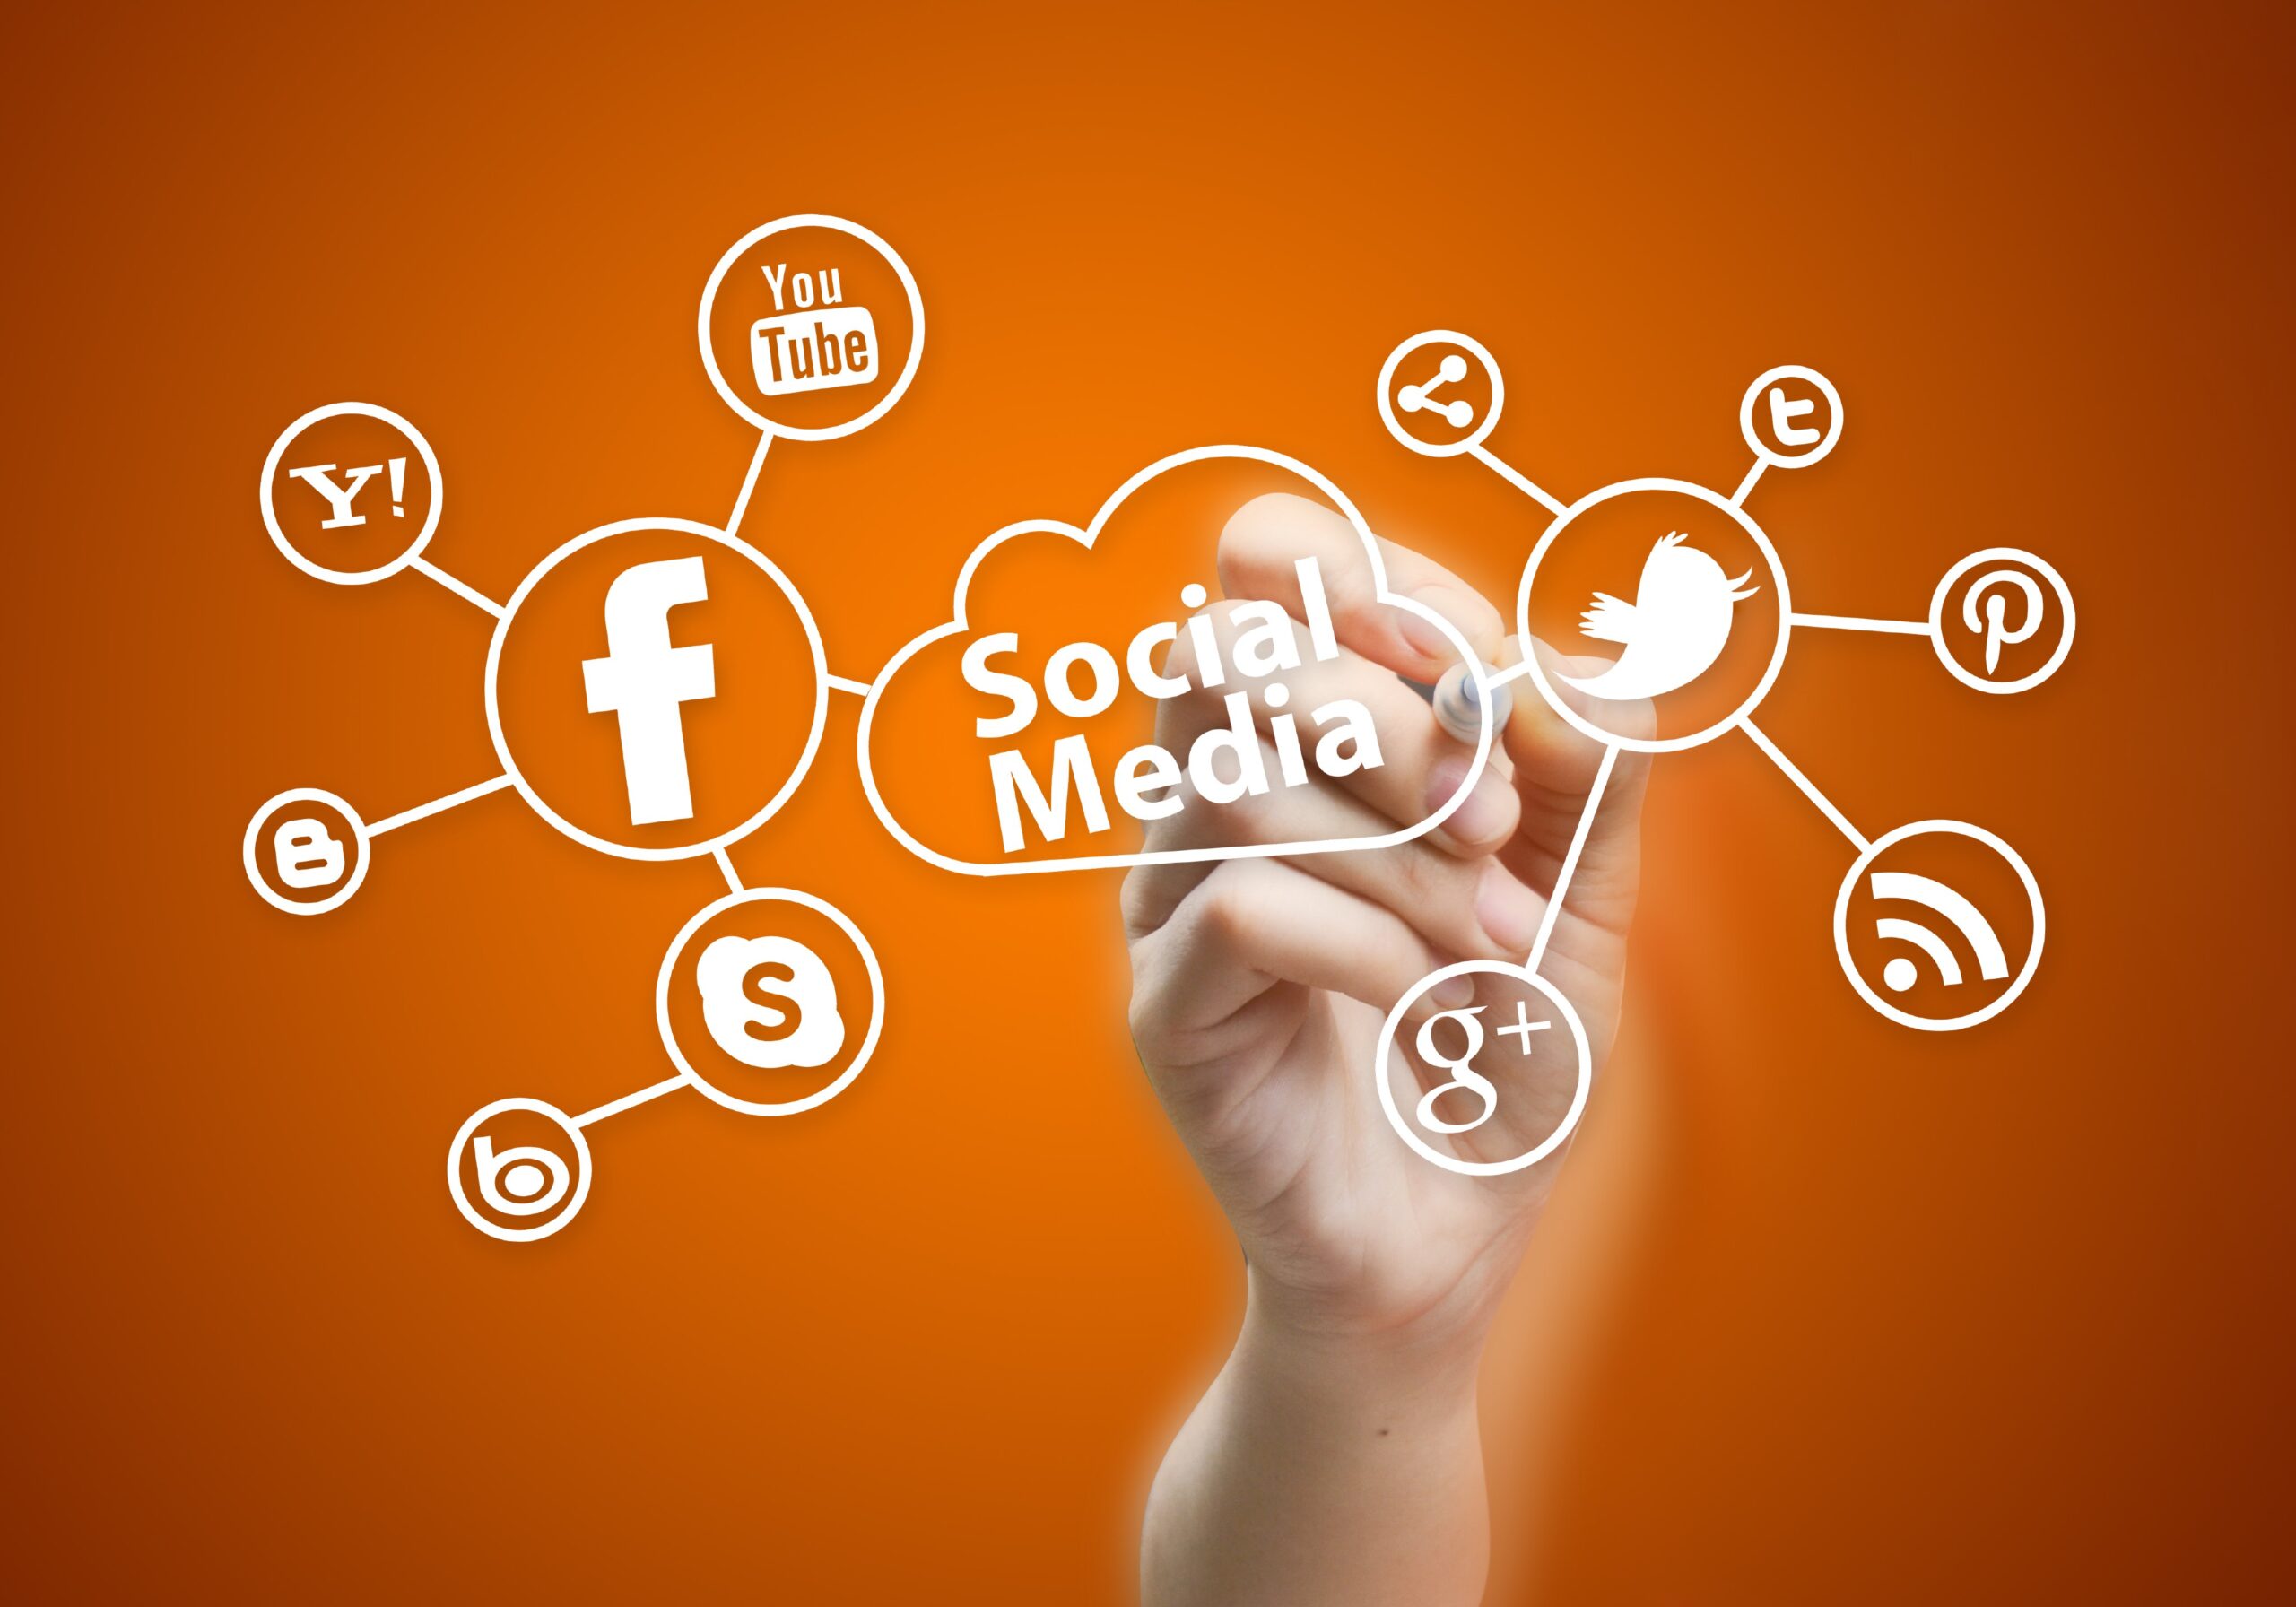 Effective Visual Storytelling for Social Media Success, Top Tips 4 U